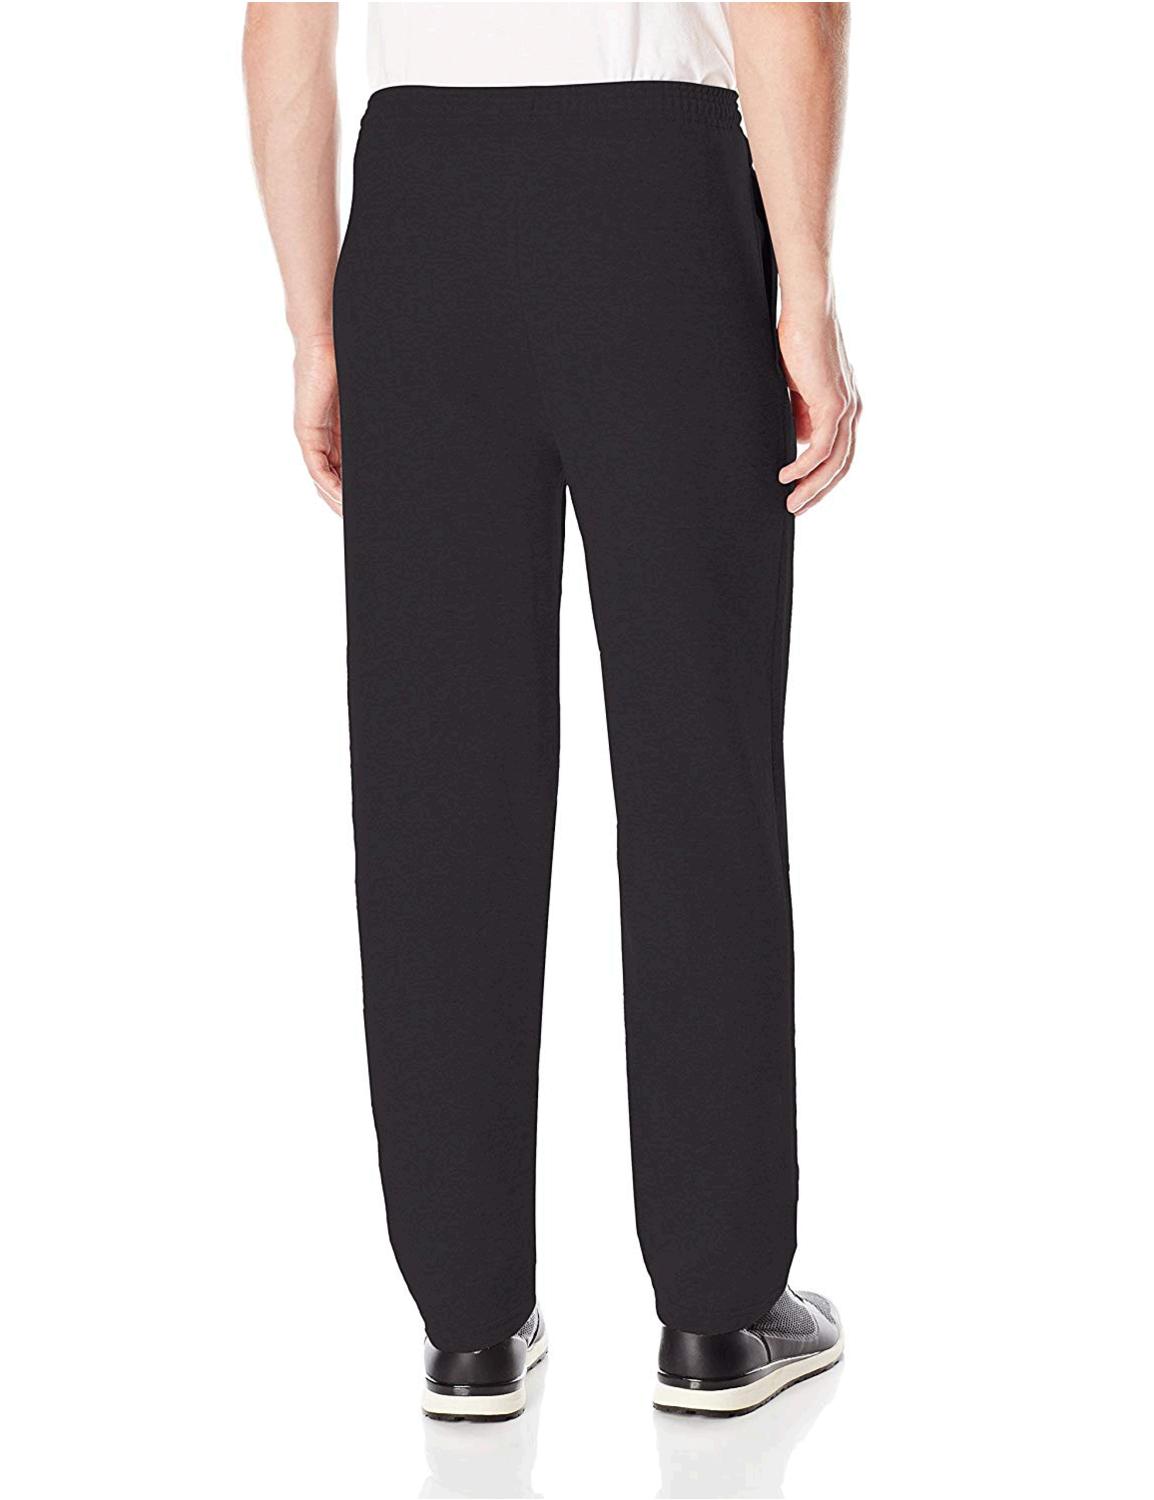 Hanes Men's Ecosmart Open Leg Fleece Pant with Pockets,, Black, Size ...